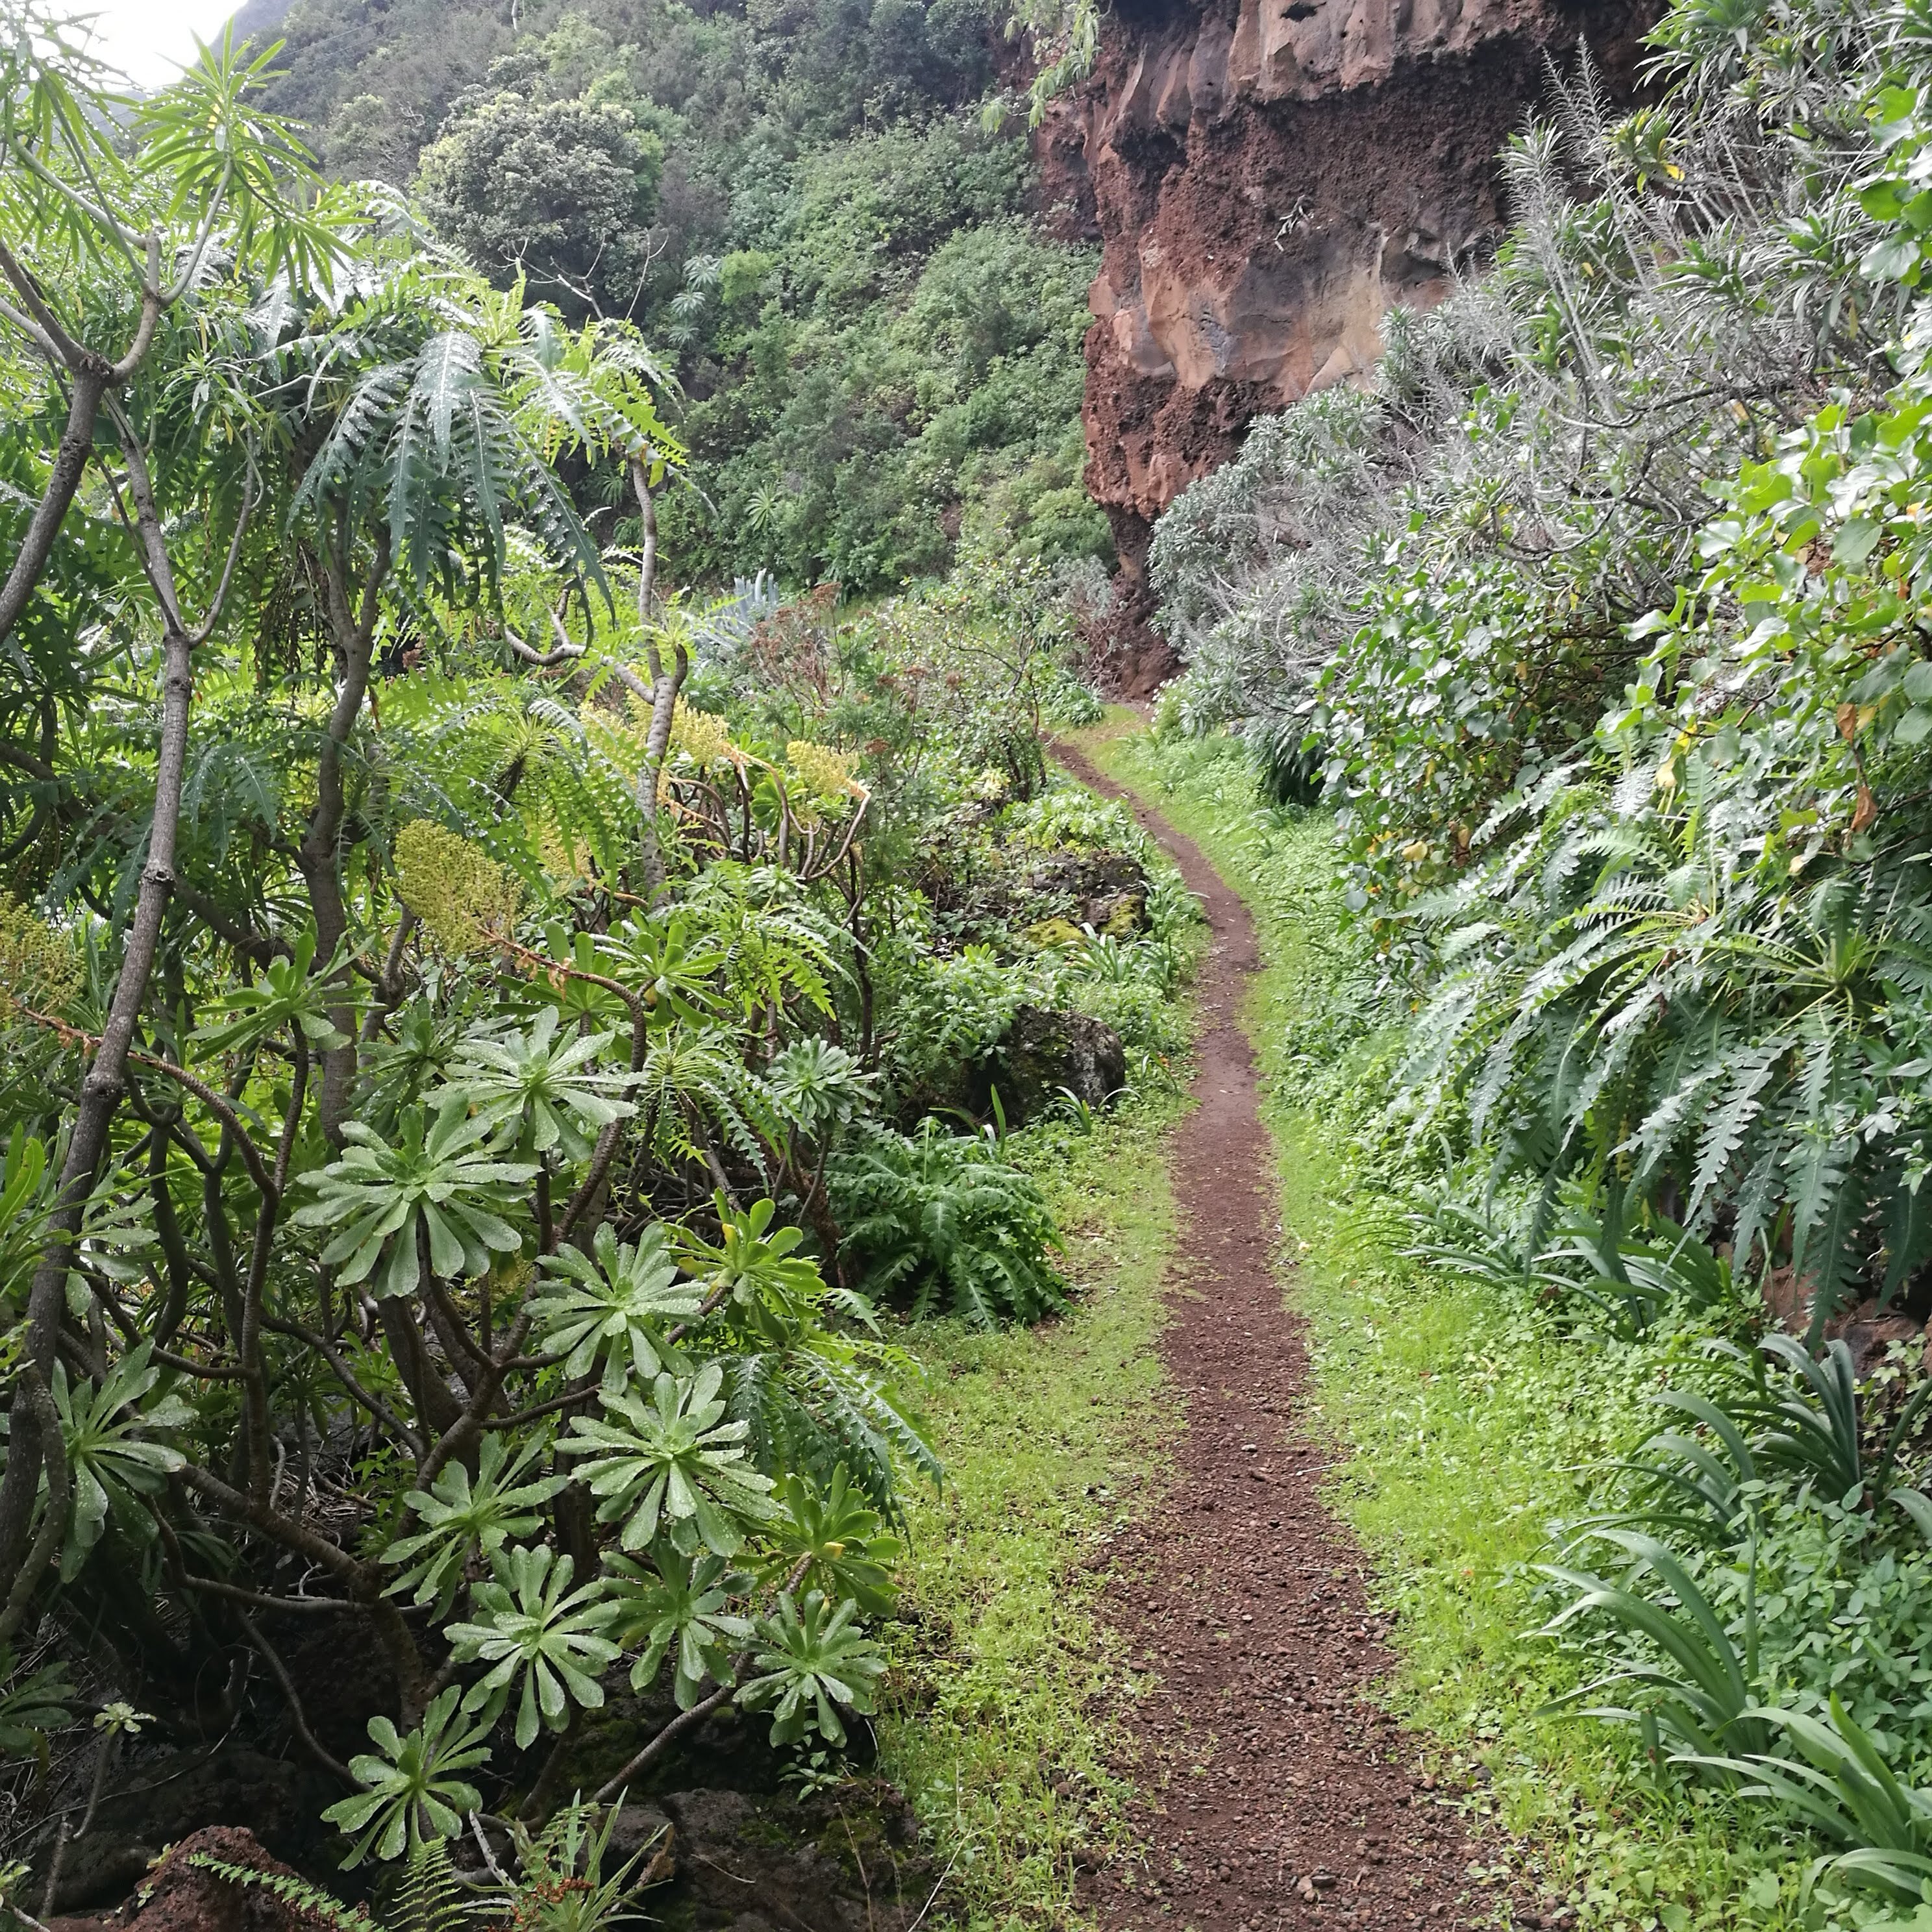 Rich vegetation on La Palma's north side